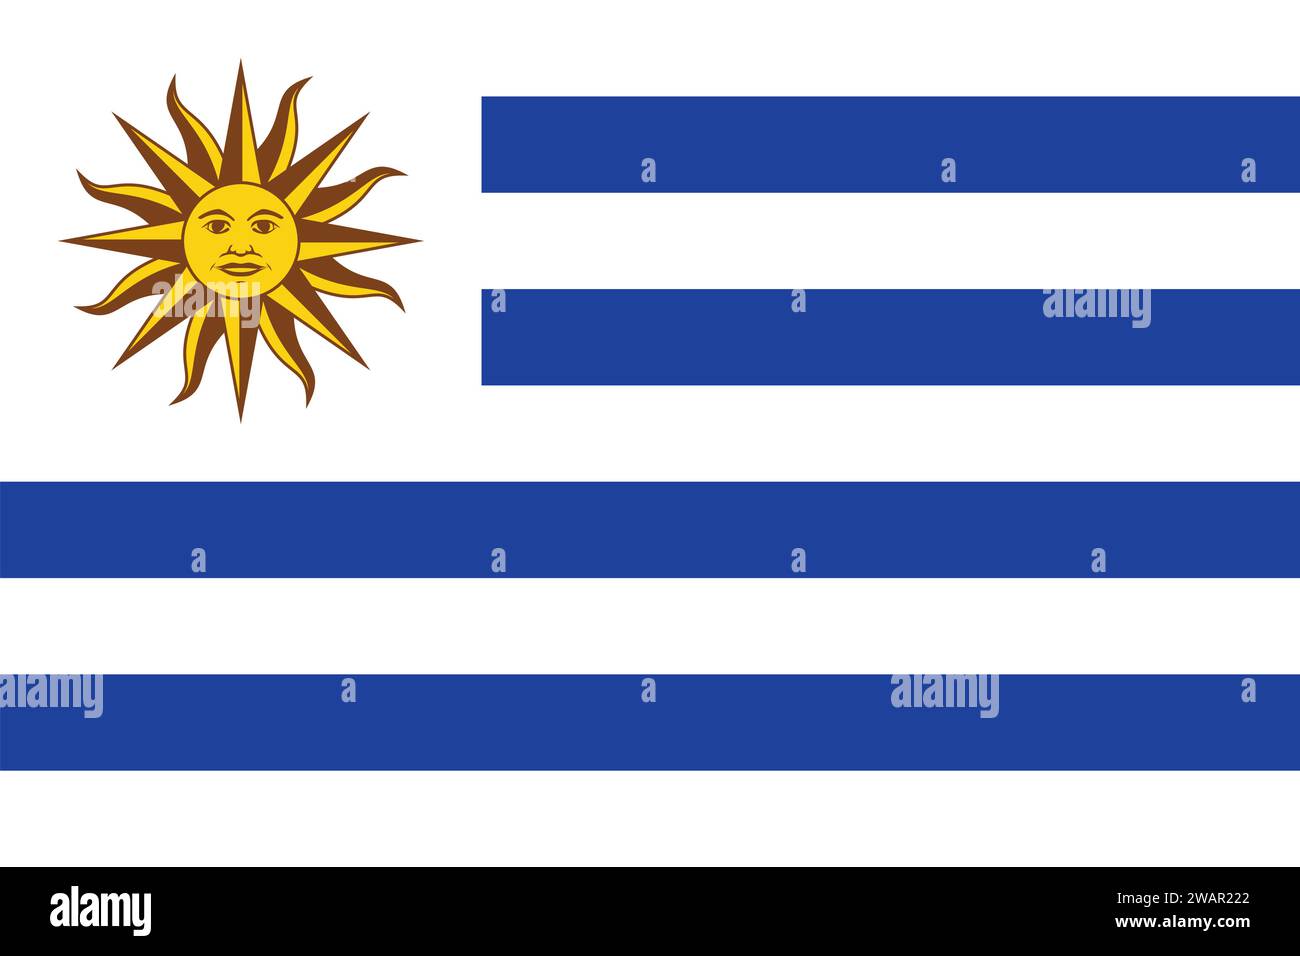 High detailed flag of Uruguay. National Uruguay flag. South America. 3D illustration. Stock Vector